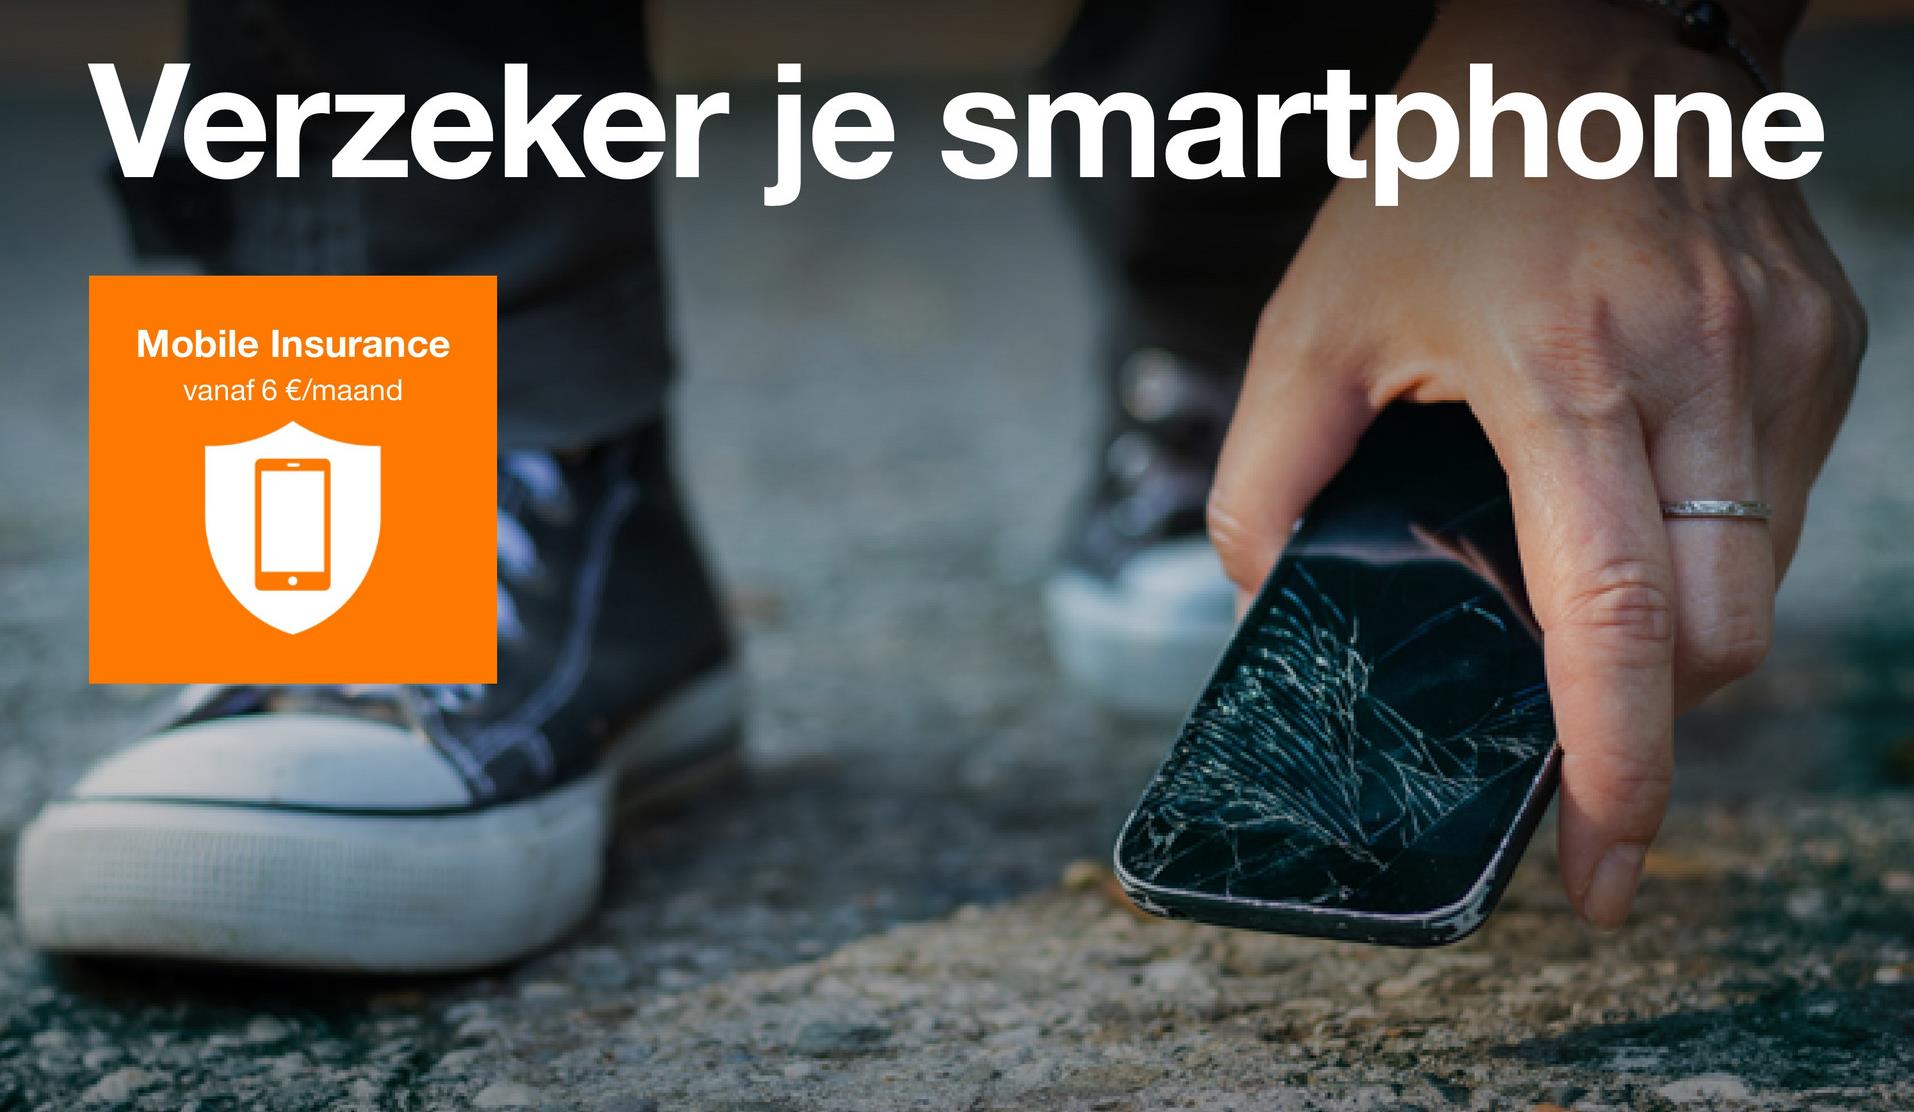 Verzeker je smartphone
Mobile Insurance
vanaf 6 €/maand